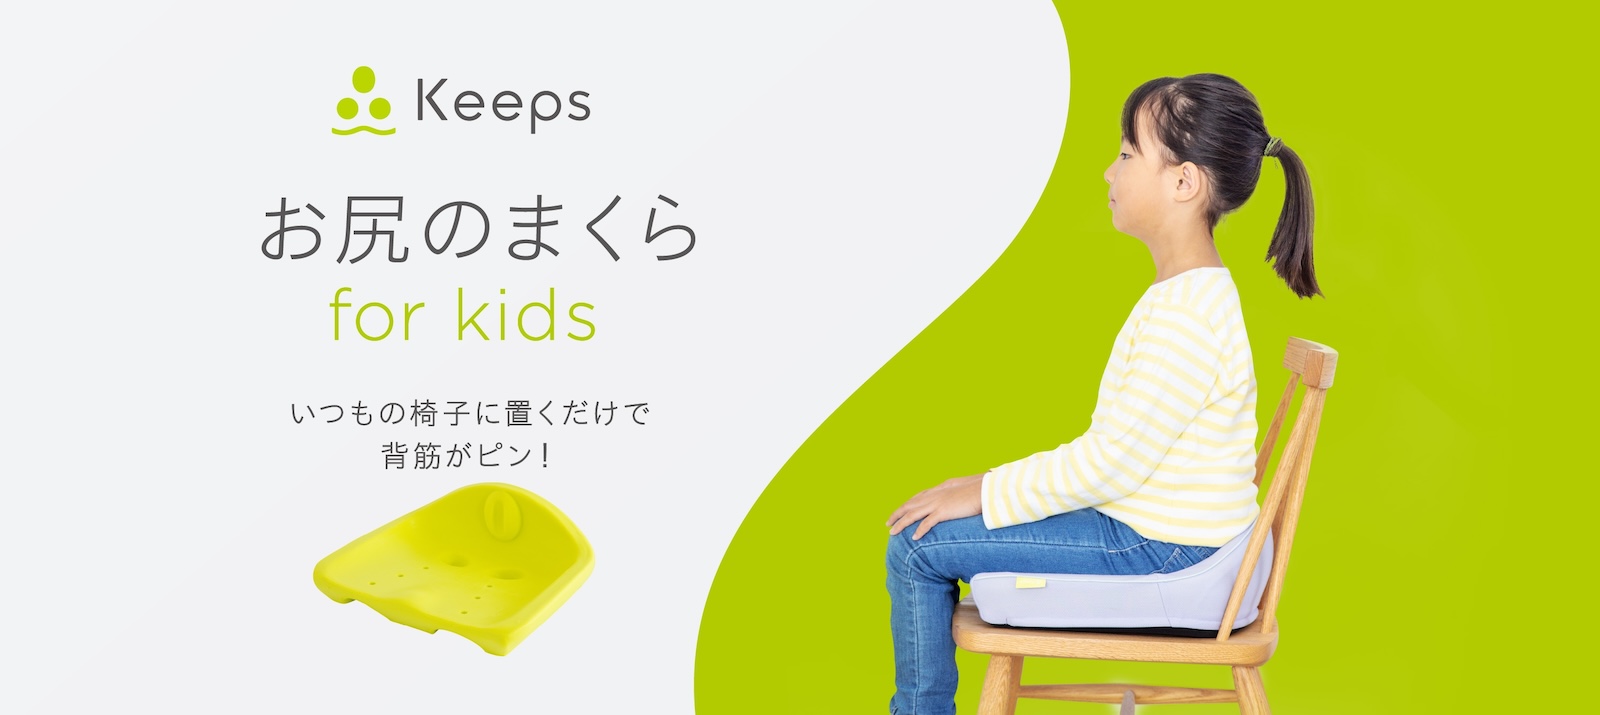 keeos お尻のまくら for kids